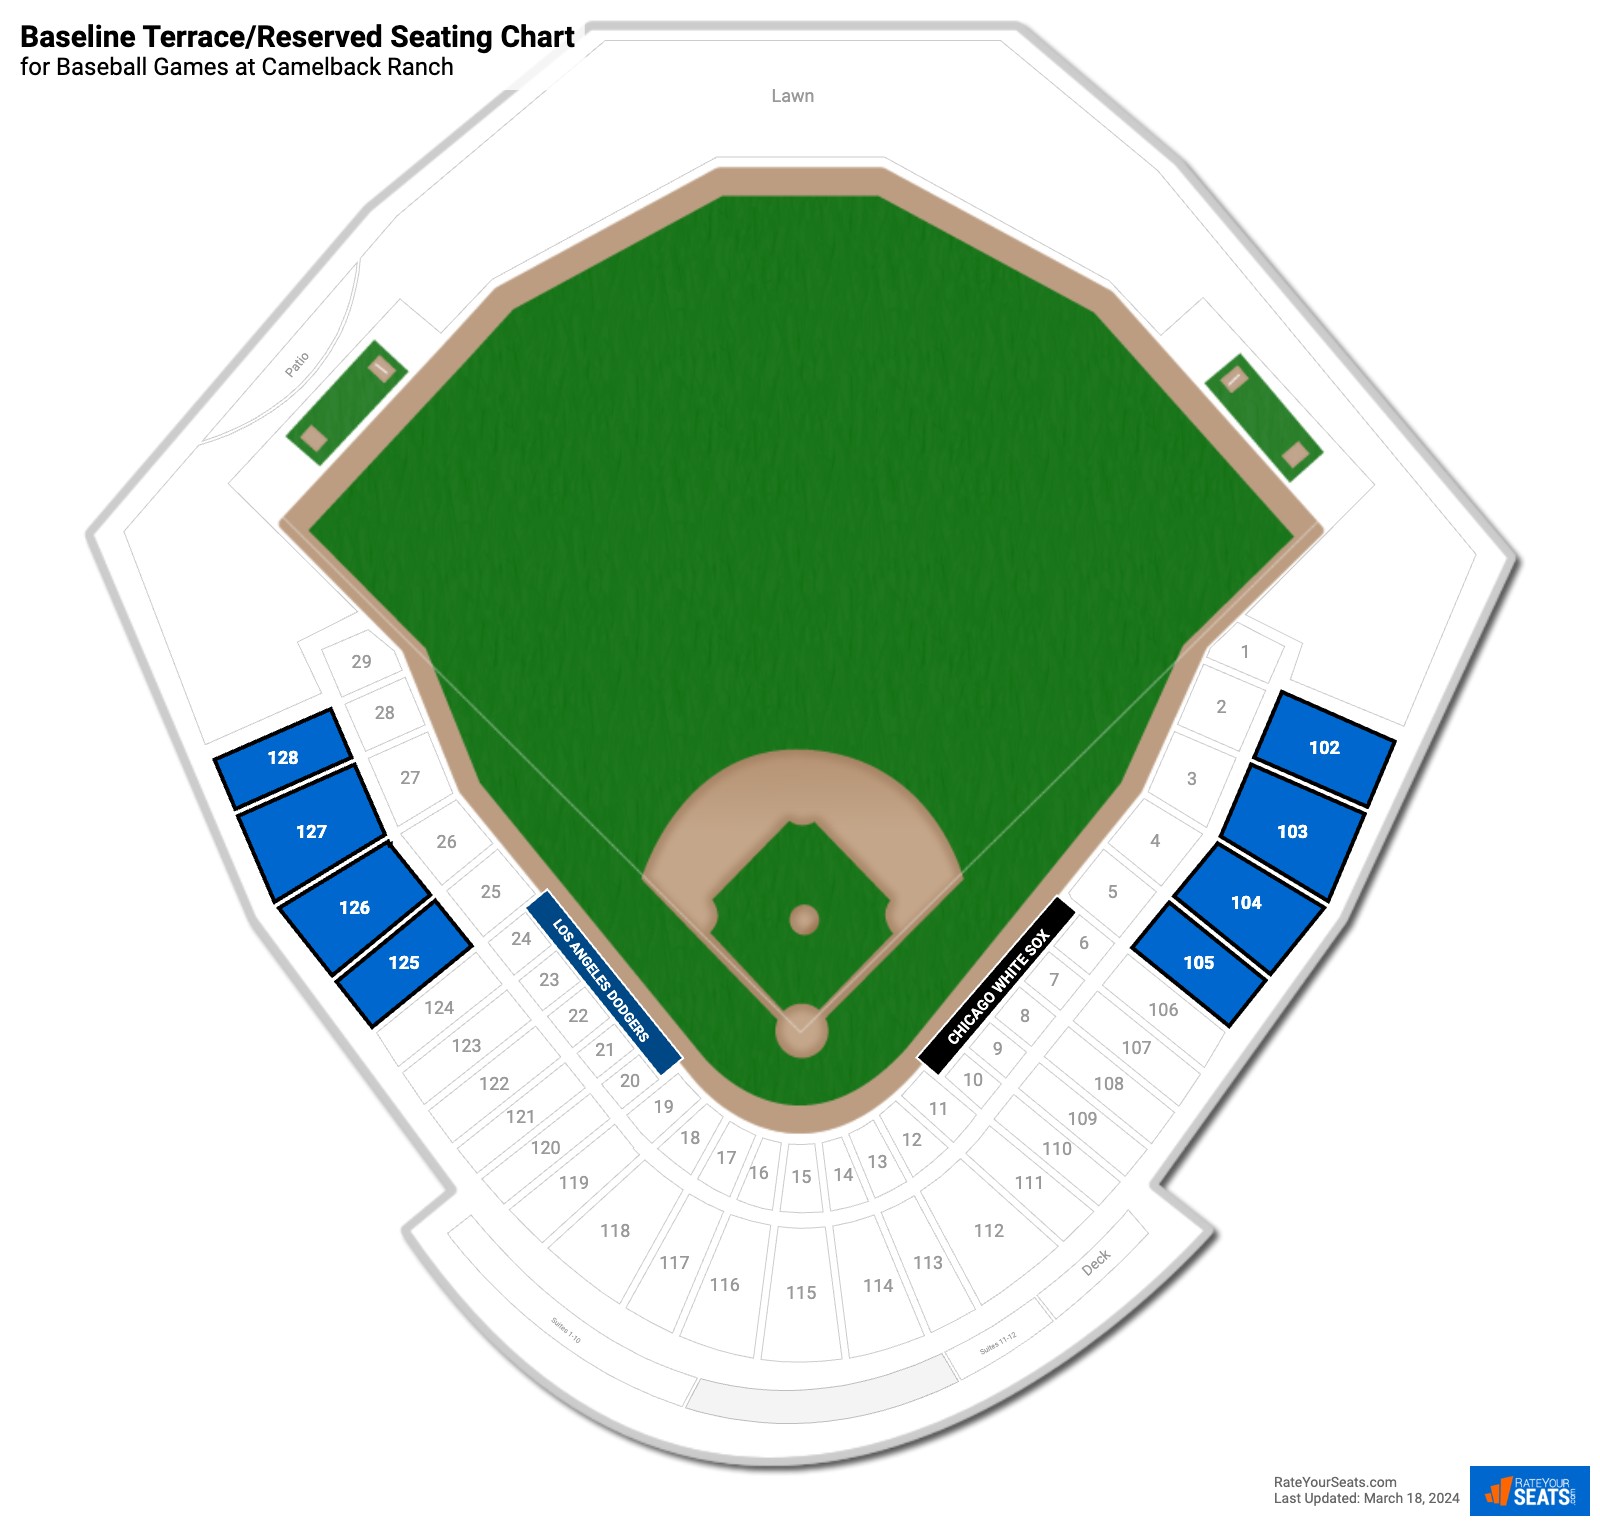 Baseball Baseline Terrace/Reserved Seating Chart at Camelback Ranch